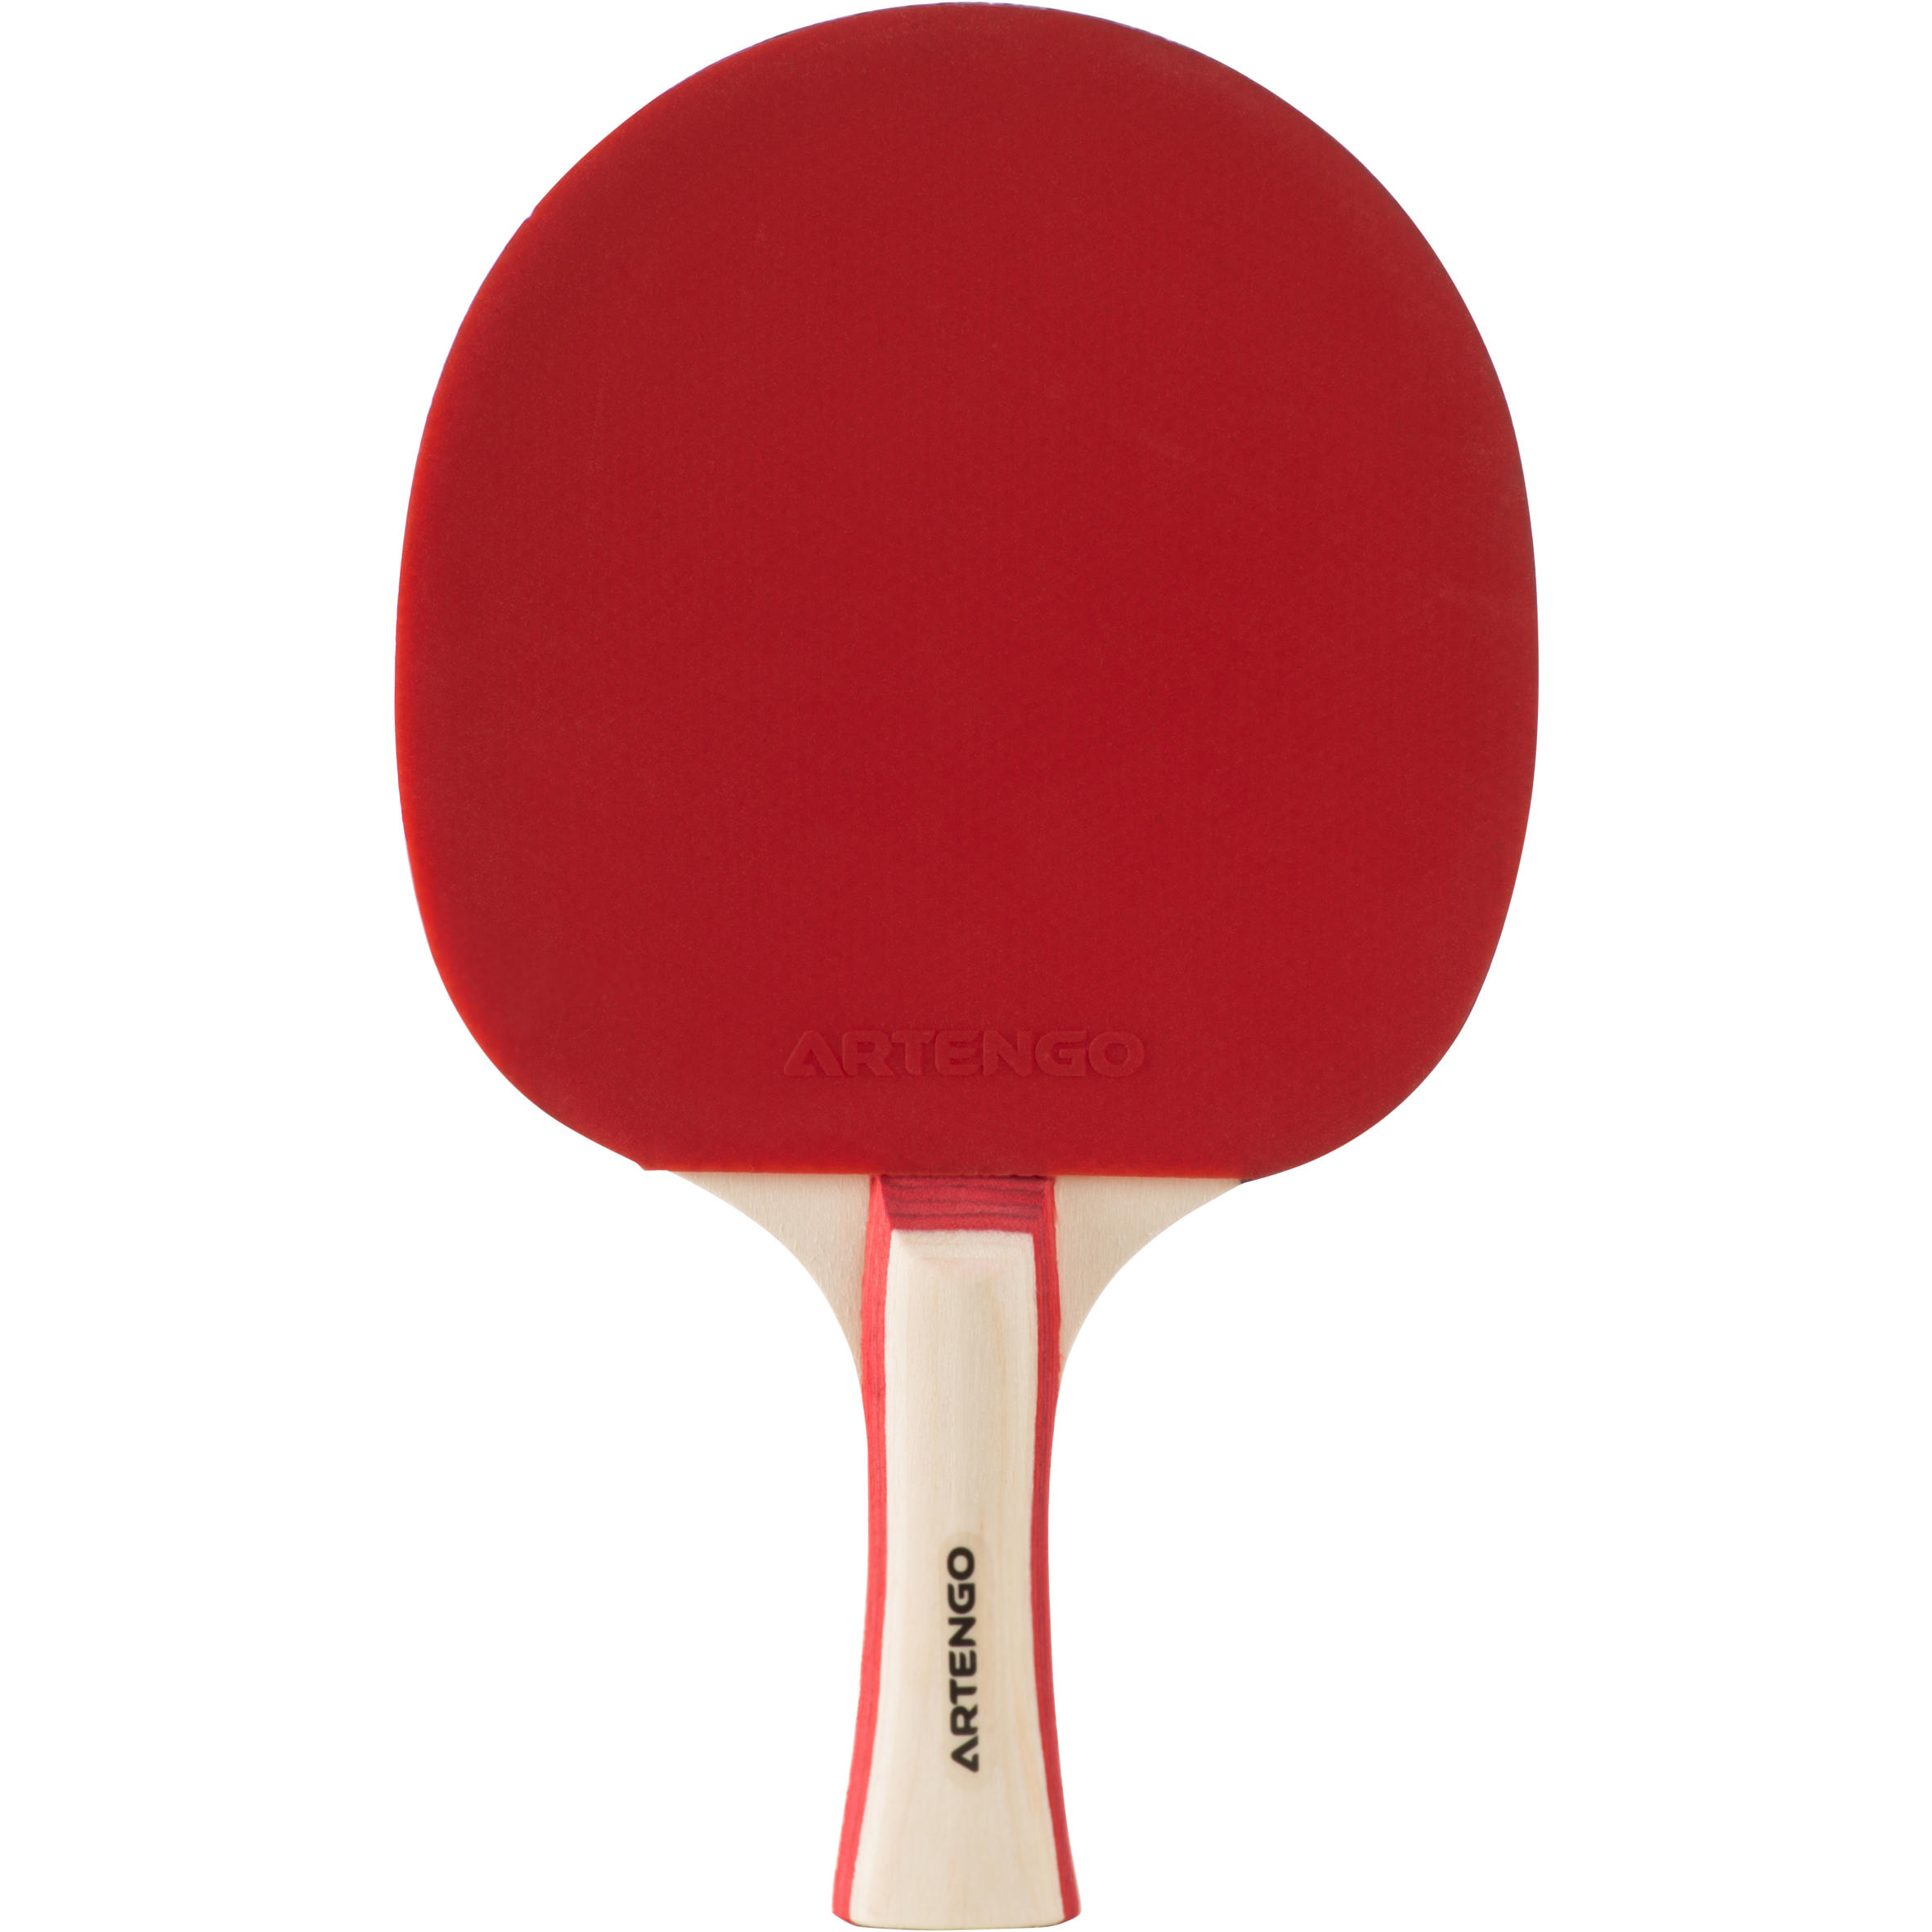 Buy Table Tennis Racquets Online In 